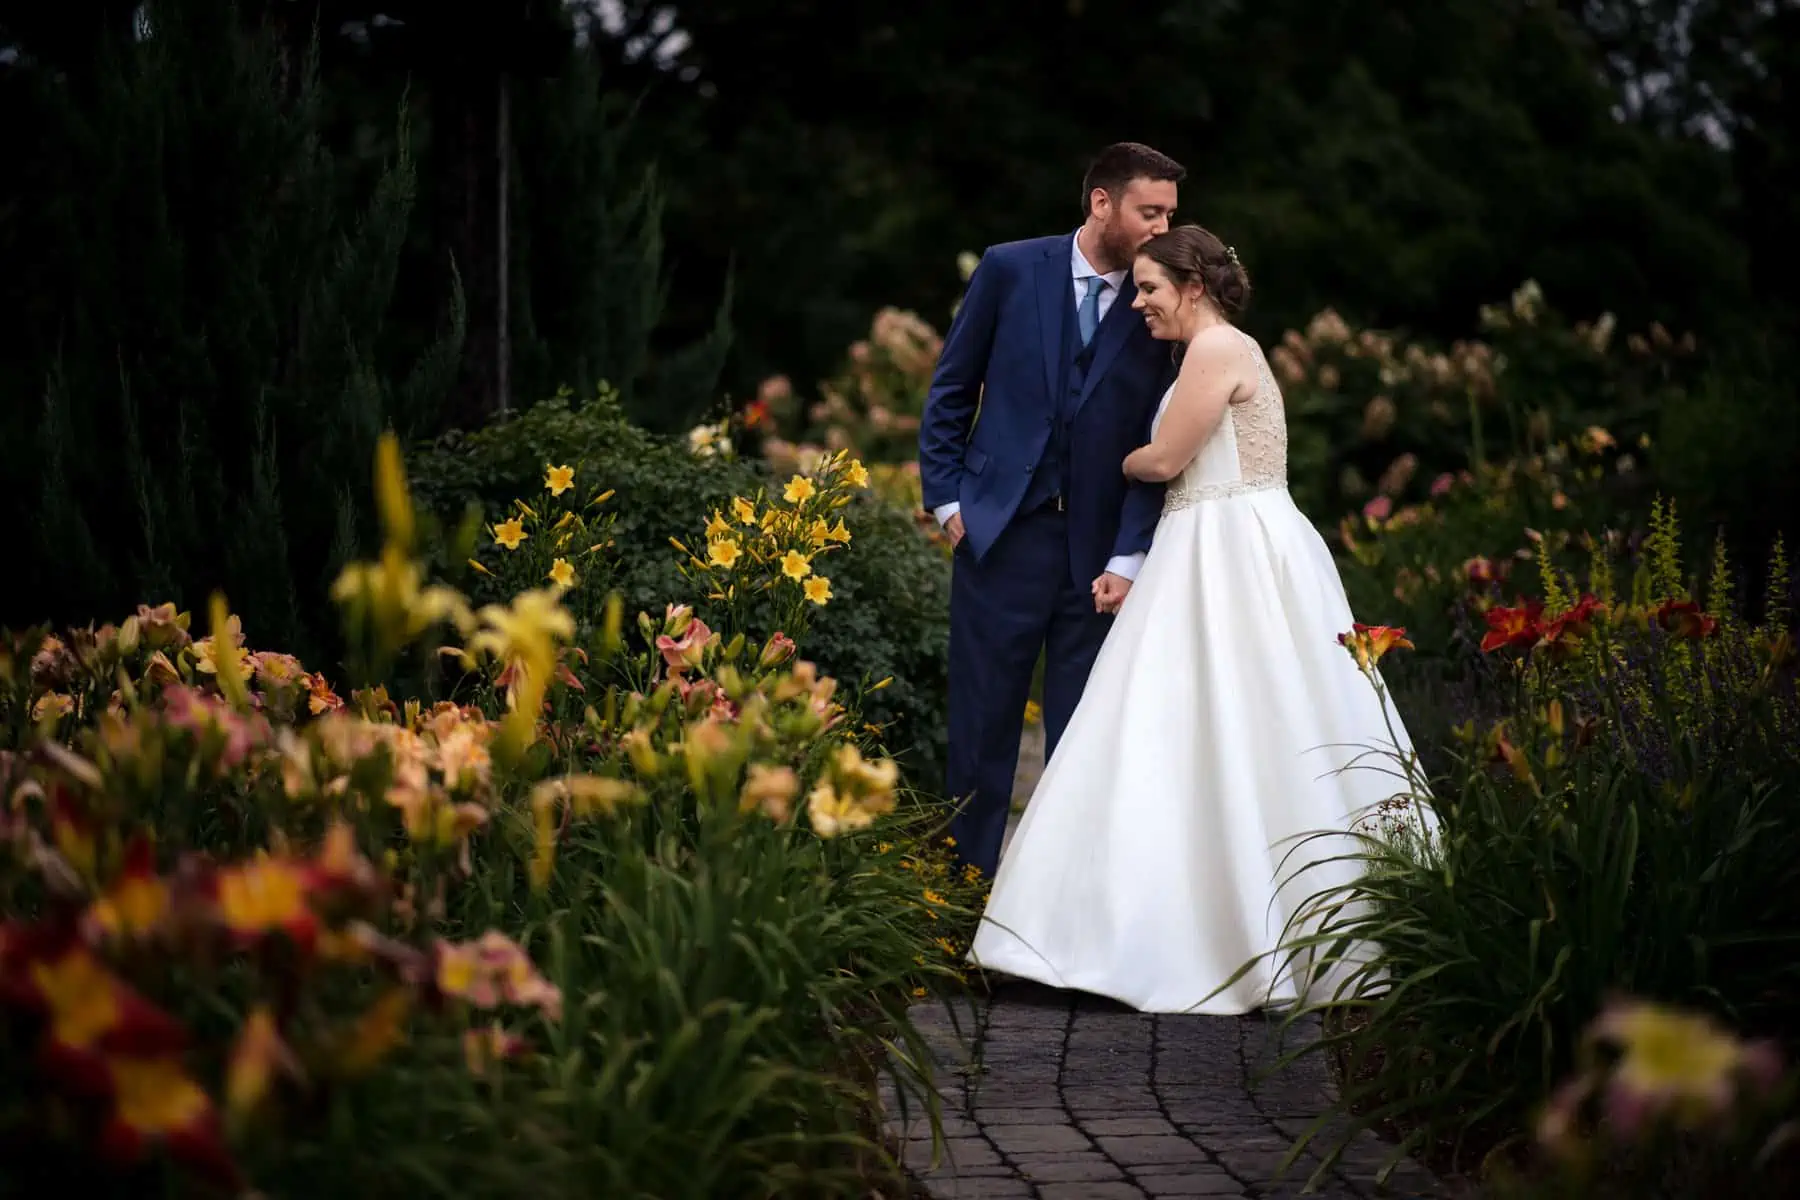 A bride and groom posing in a garden.